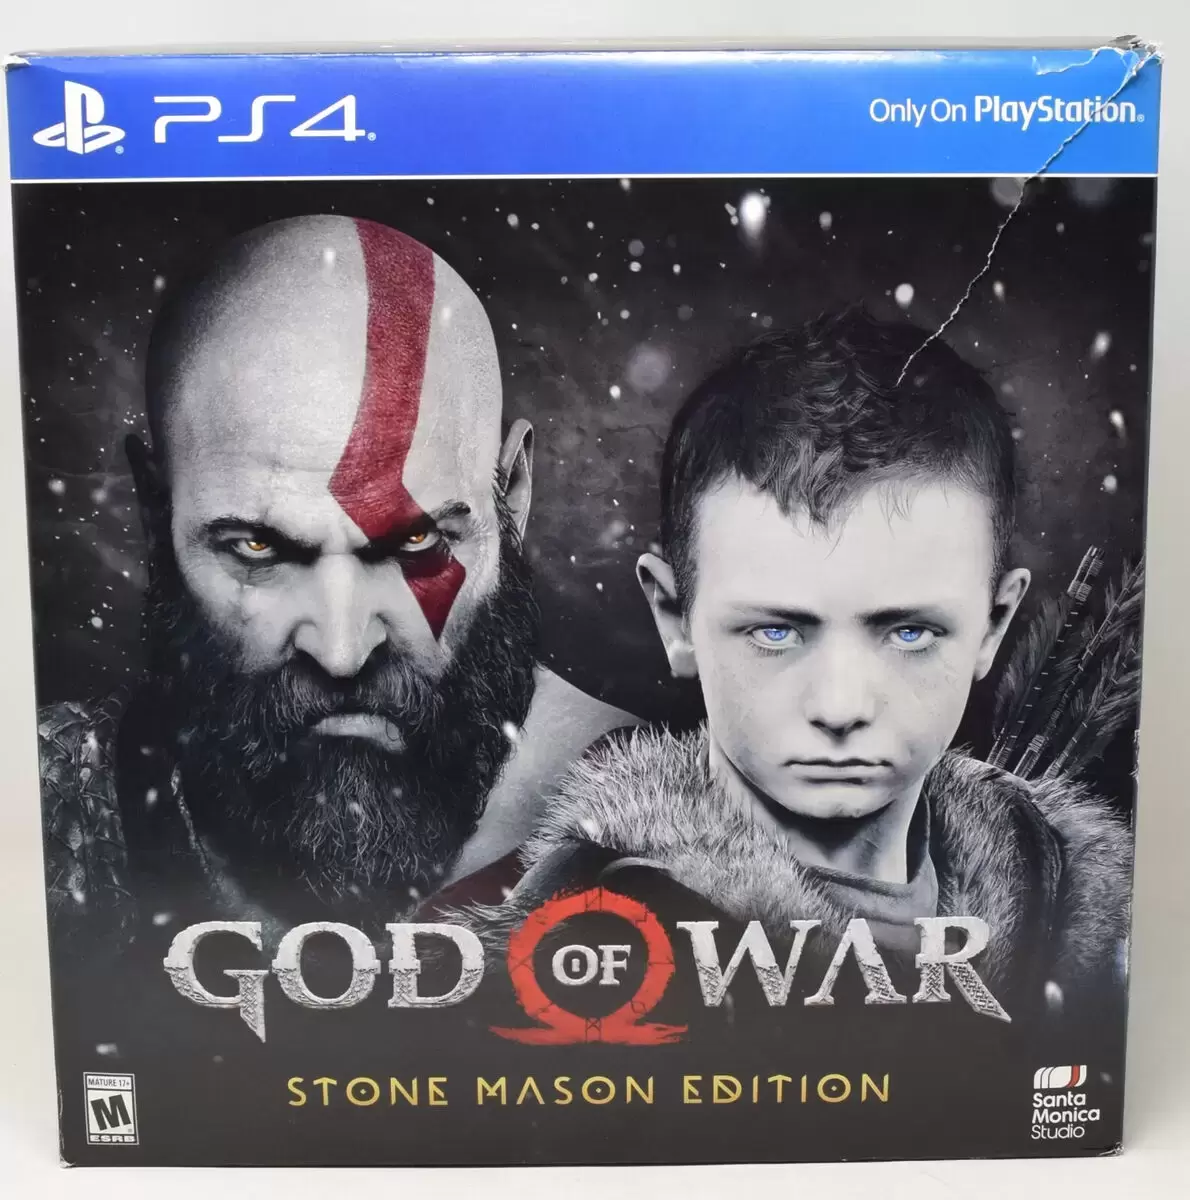 PS4 Games - God of War Stone Mason Edition